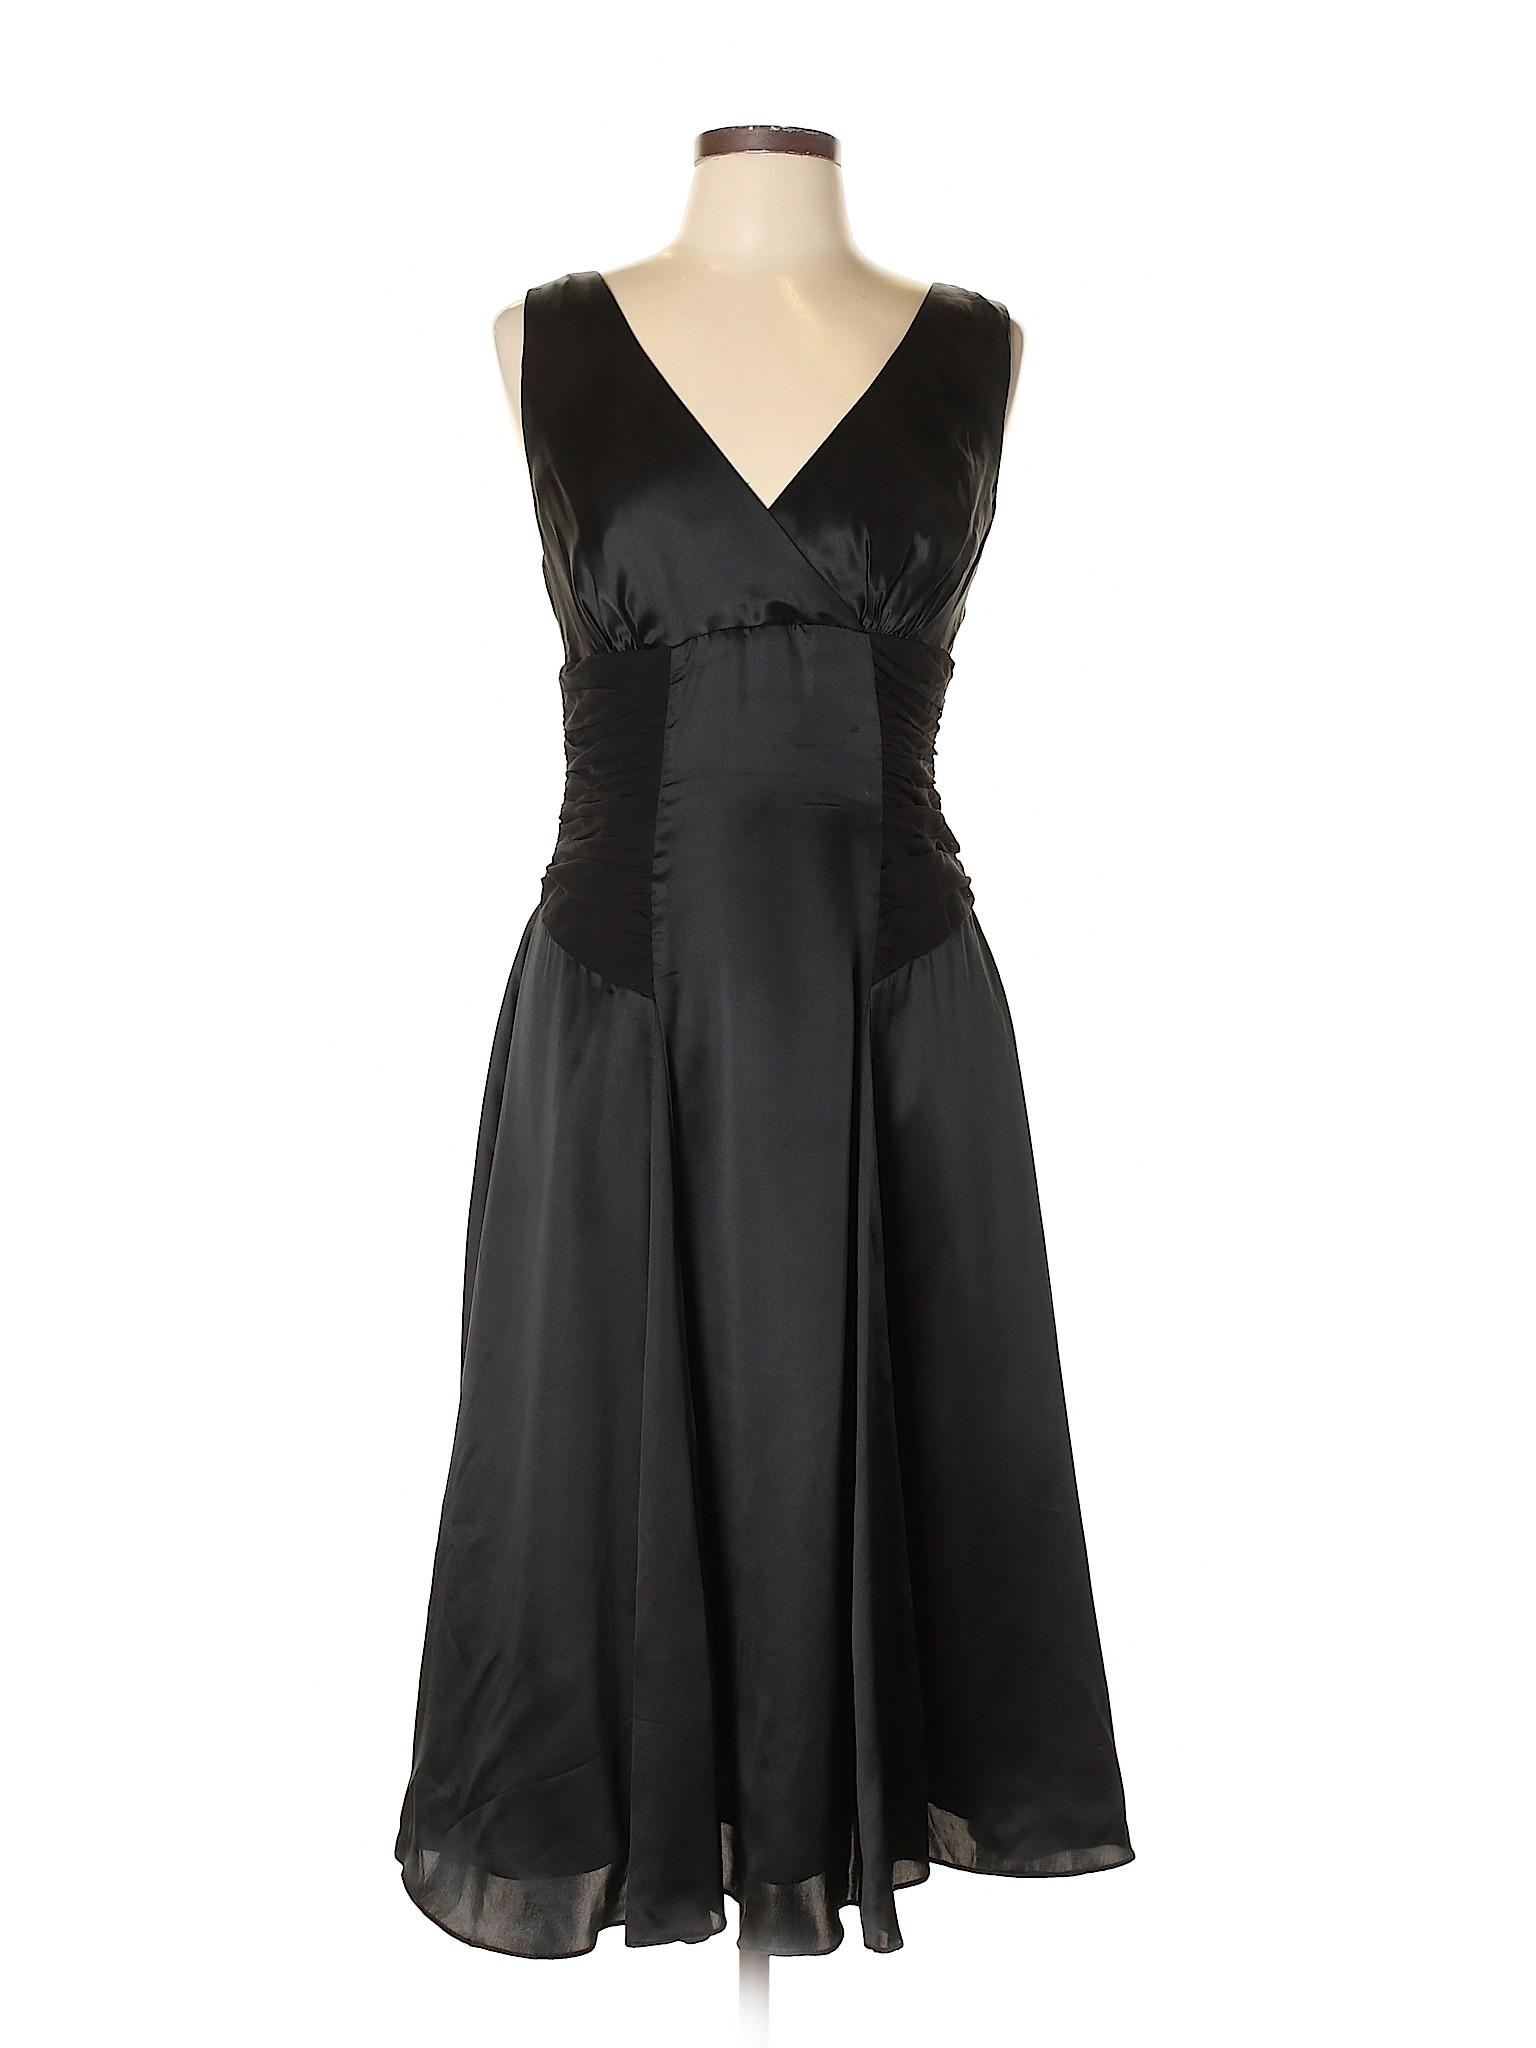 Donna Ricco Women Black Cocktail Dress 10 | eBay